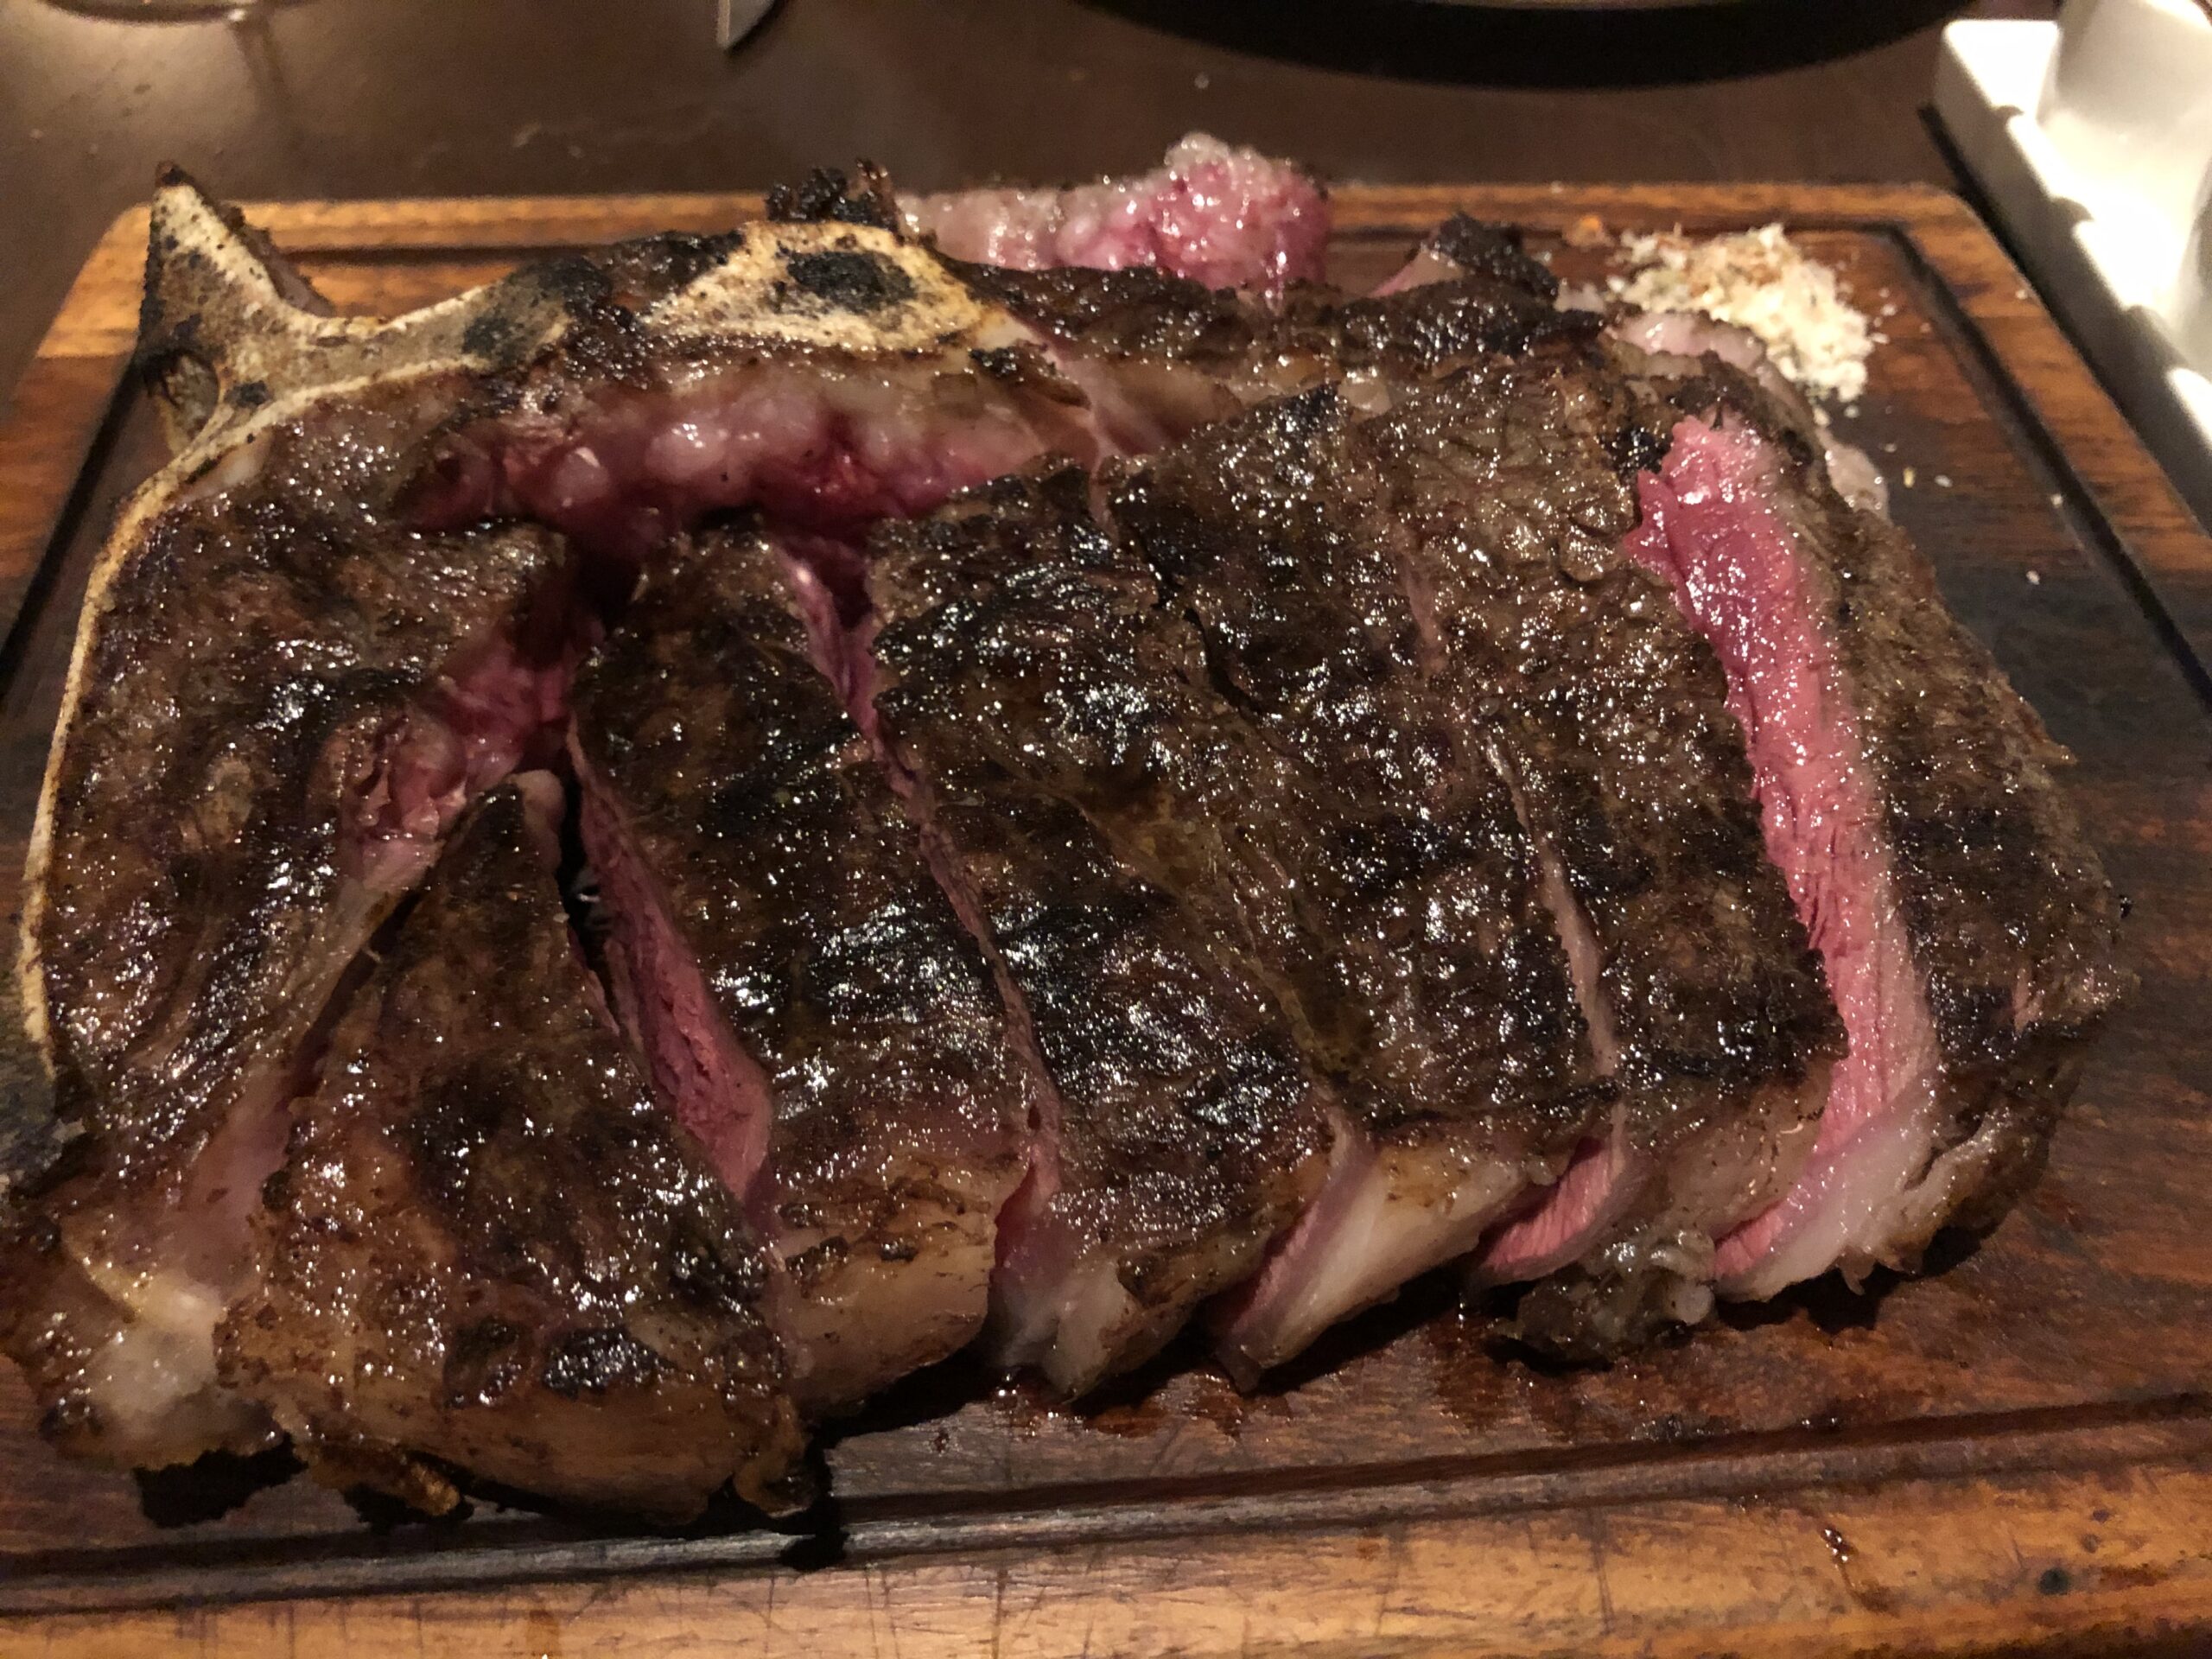 The 1kg steak